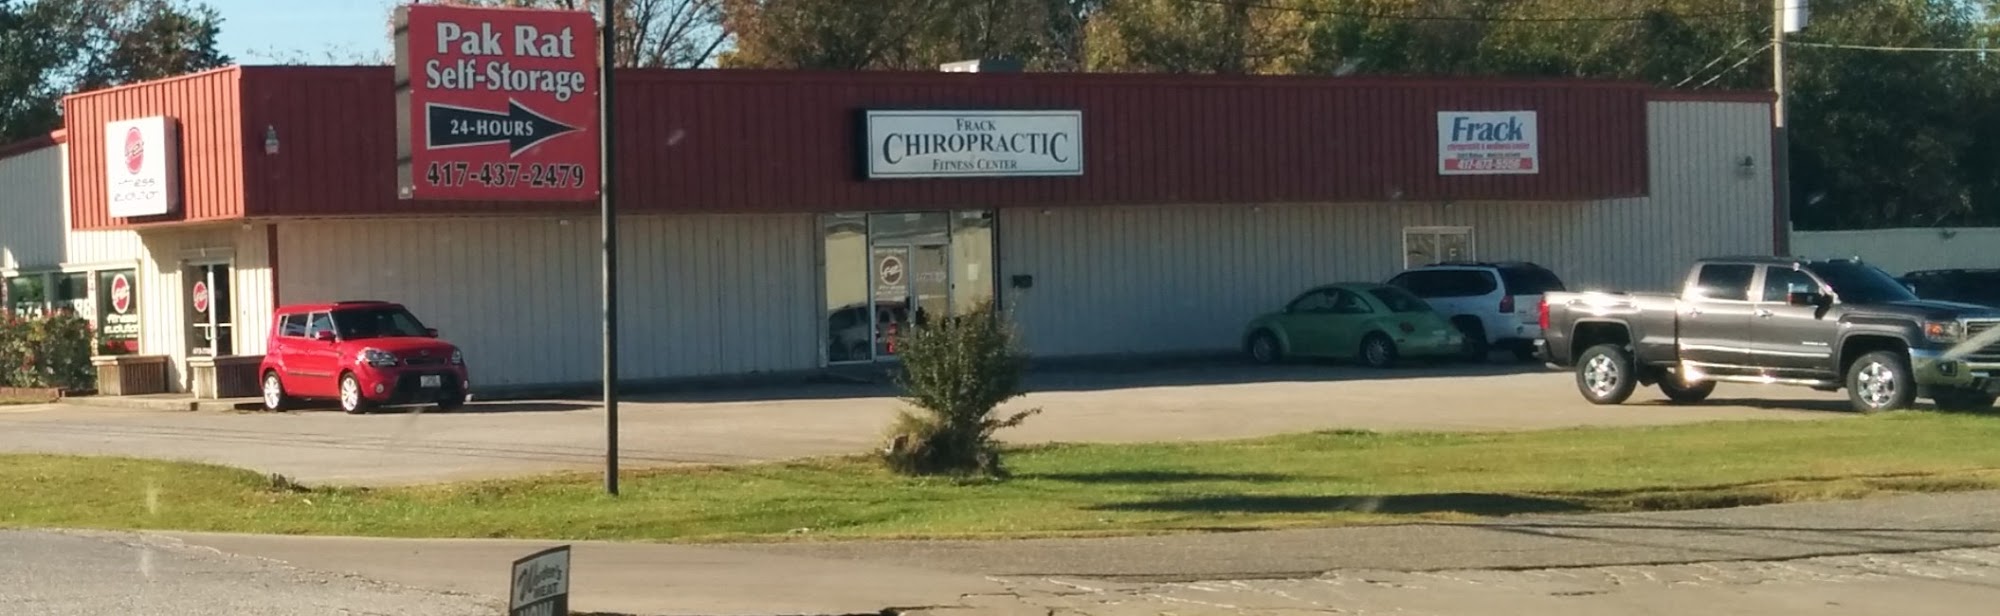 Frack Chiropractic 1506 S Madison St, Webb City Missouri 64870